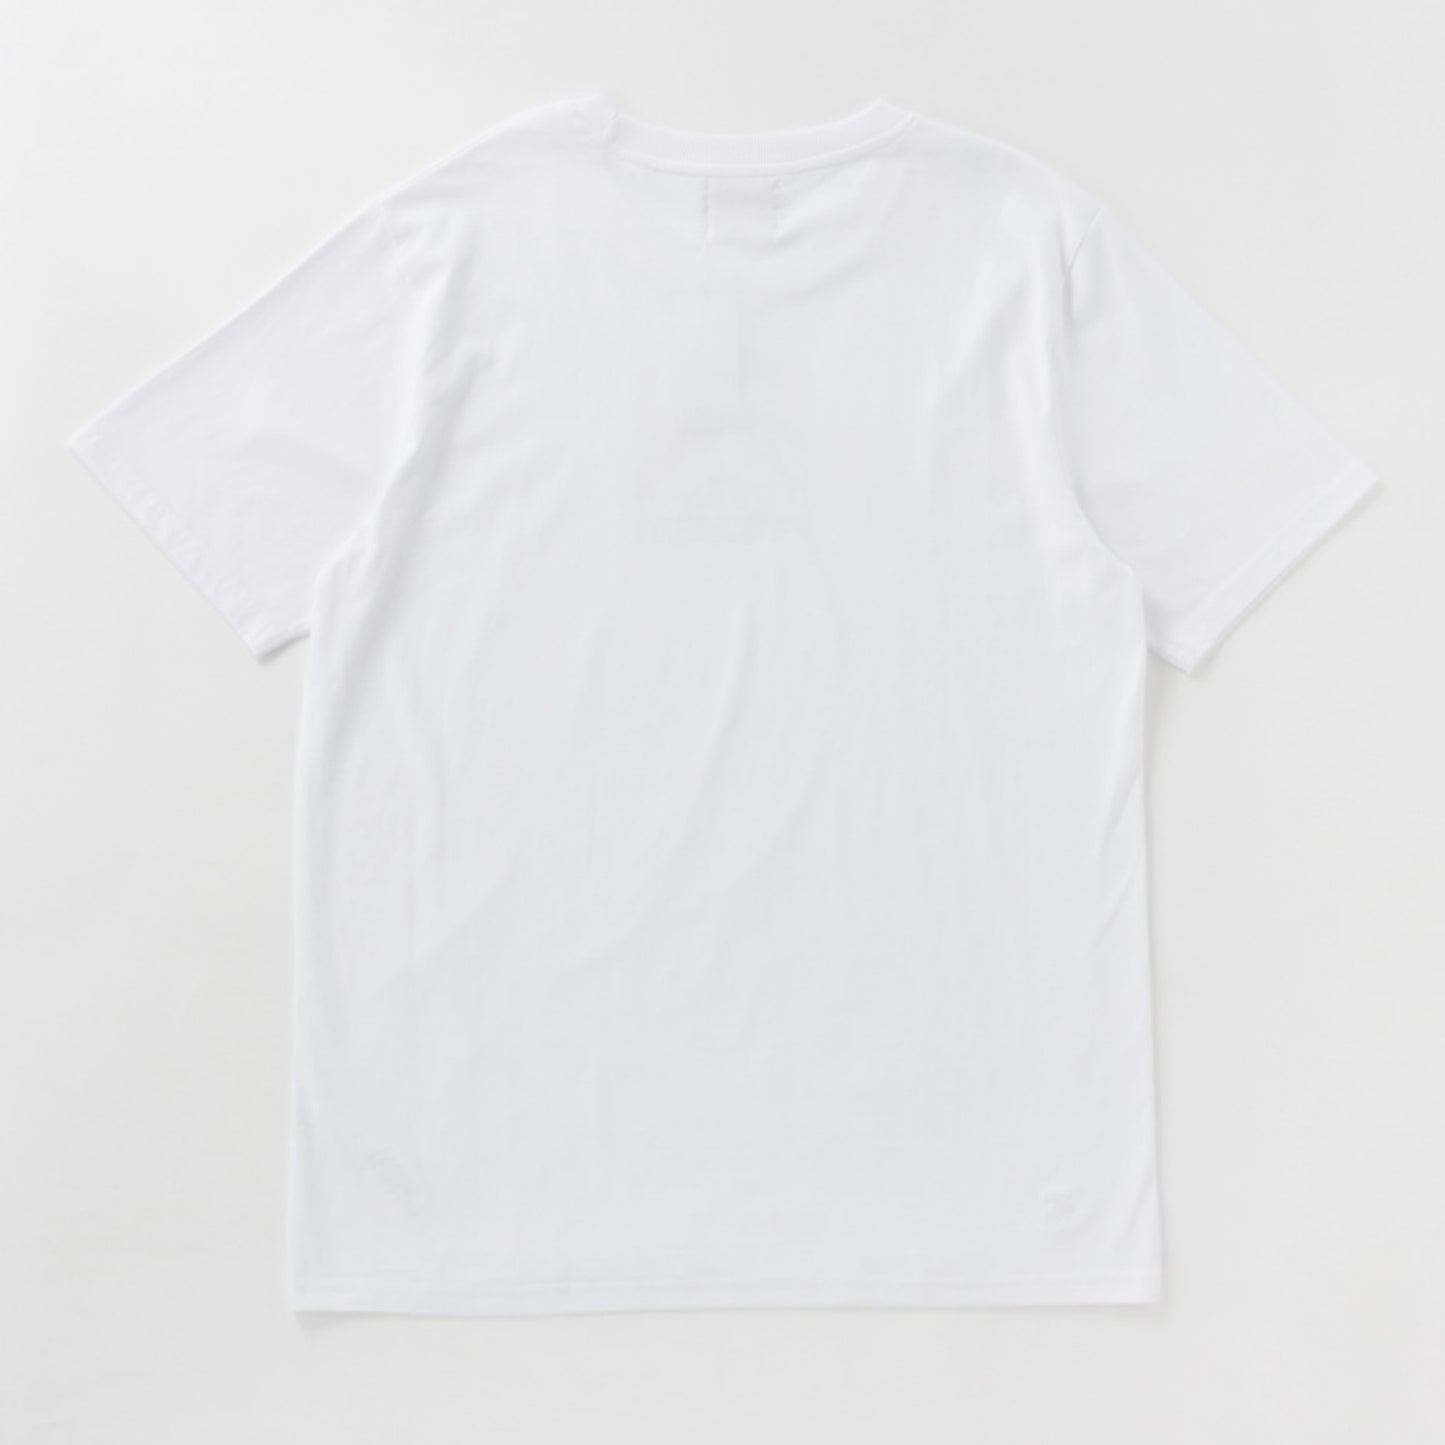 UOMINI FORTI T-shirt stampata-WHITE